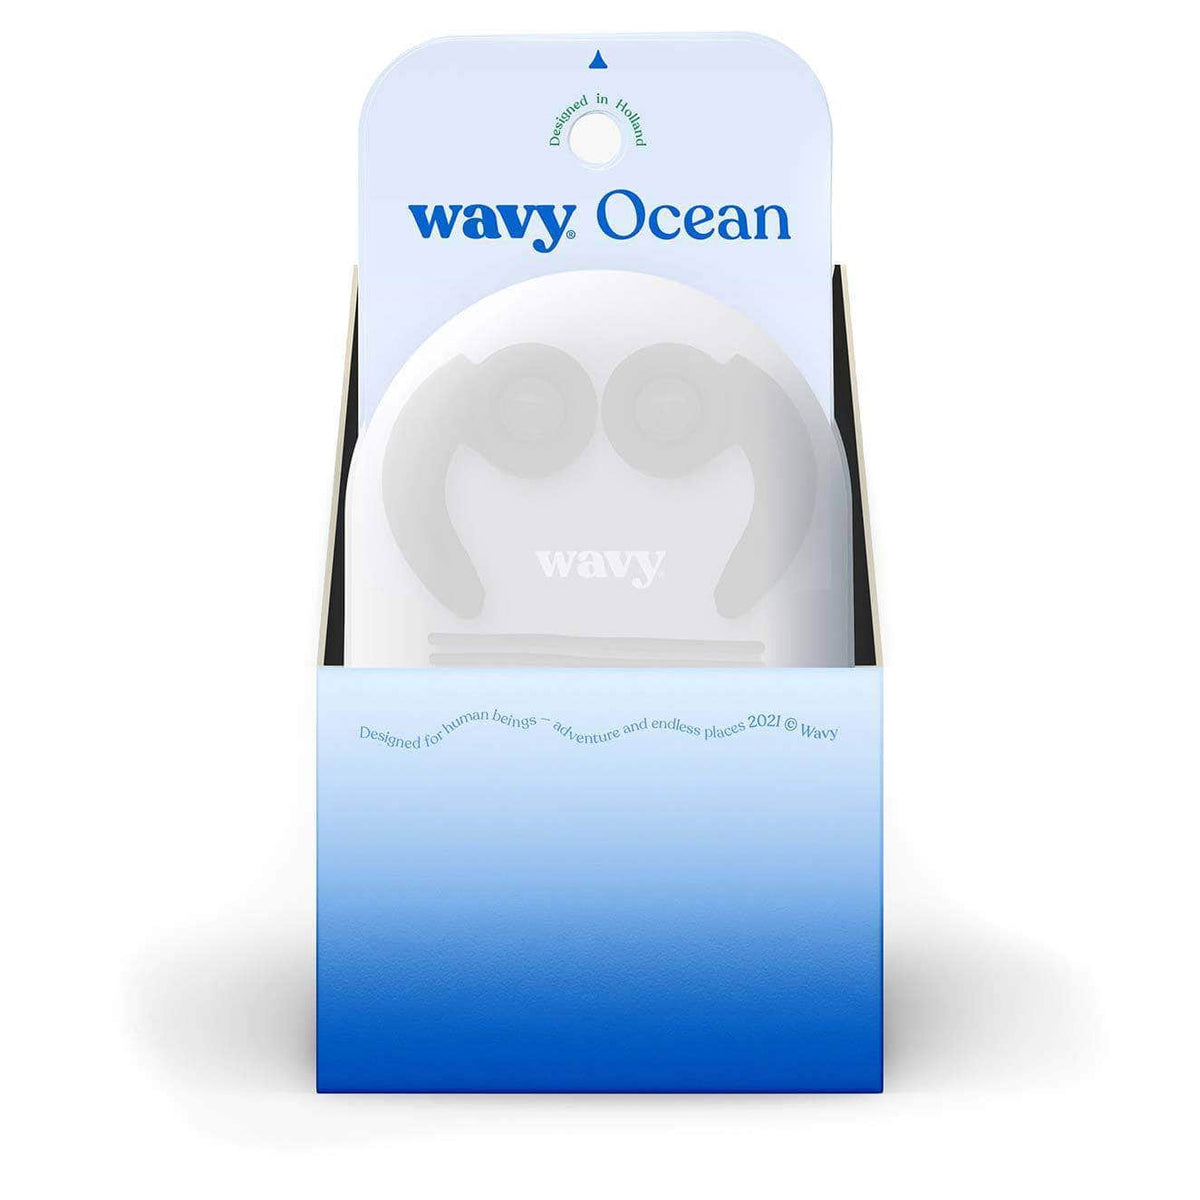 Wavy Ocean Surf &amp; Swim Earplugs - Black